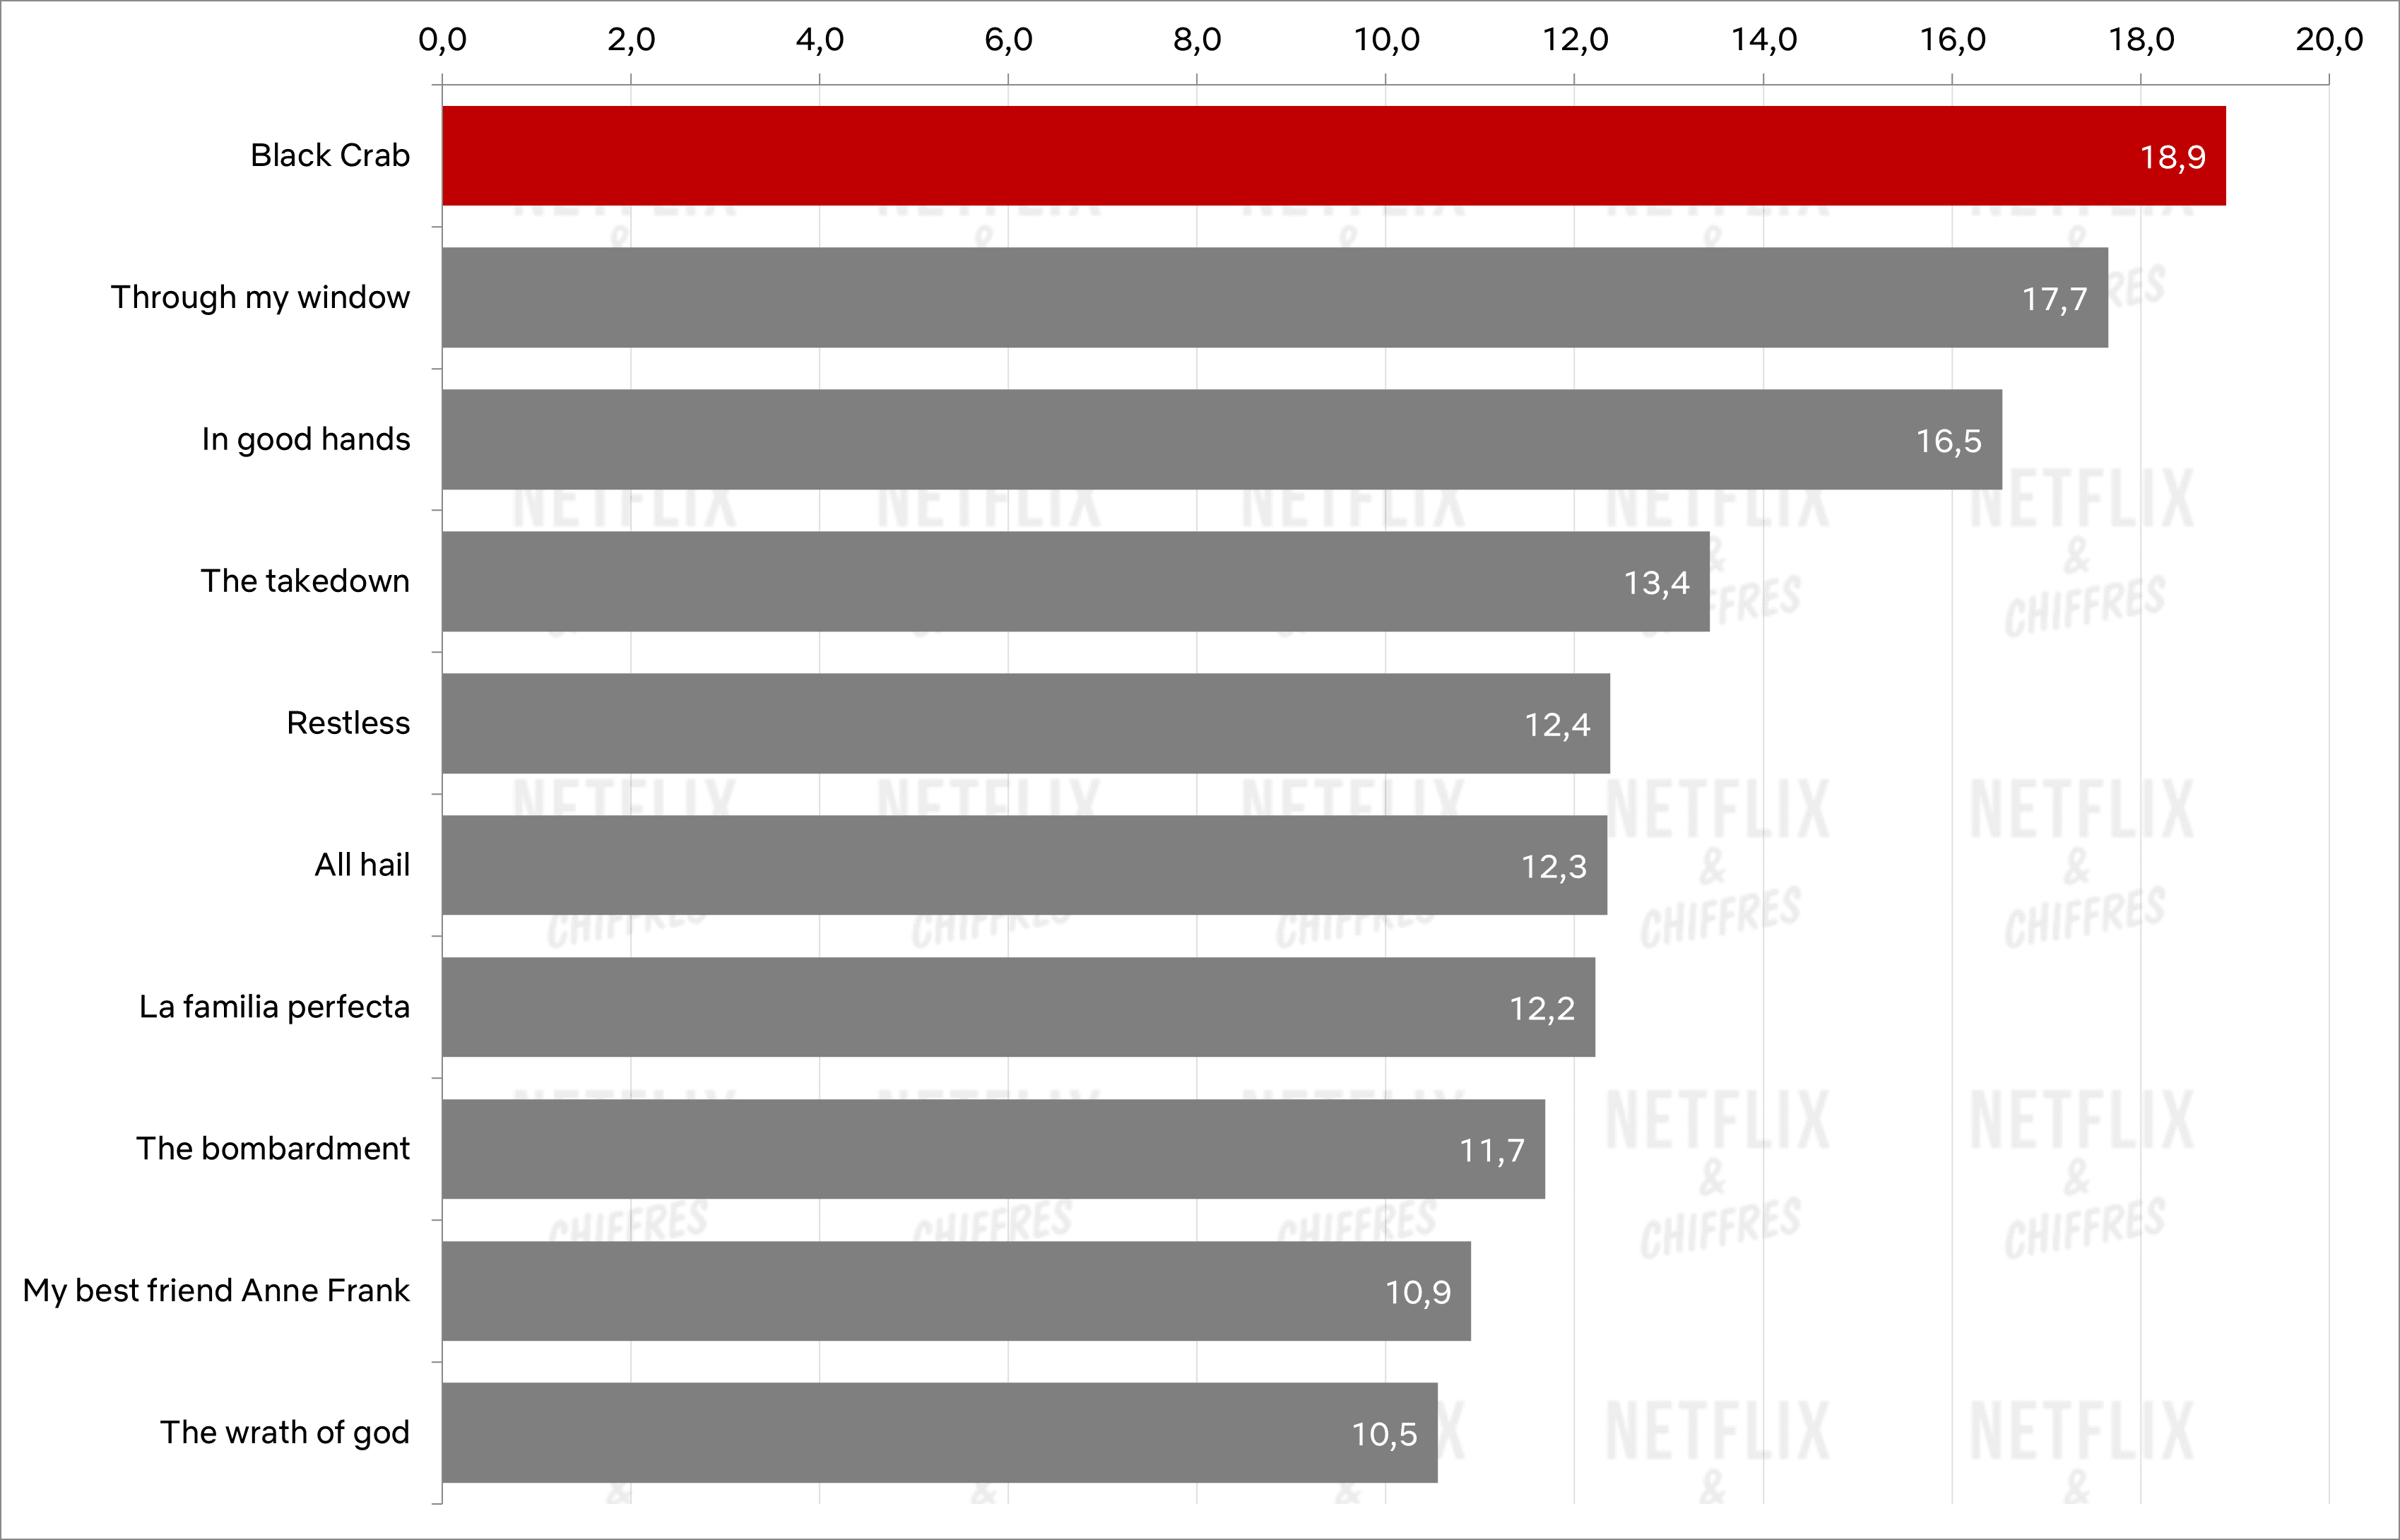 black crab tops chart of netflix original non english movies